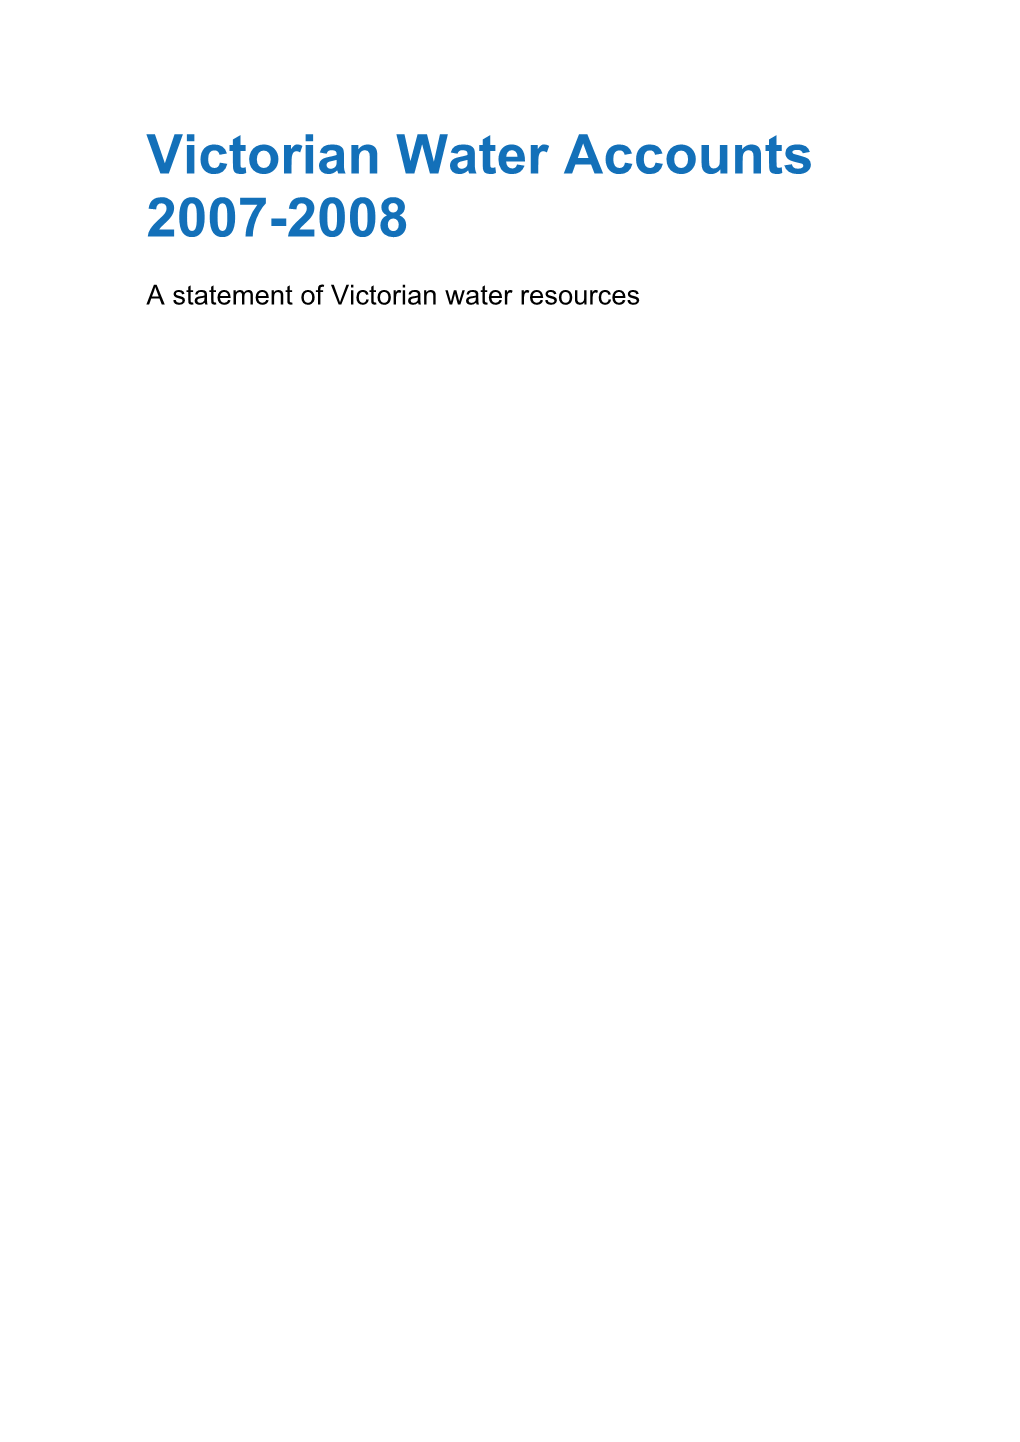 Victorian Water Accounts 2007-2008